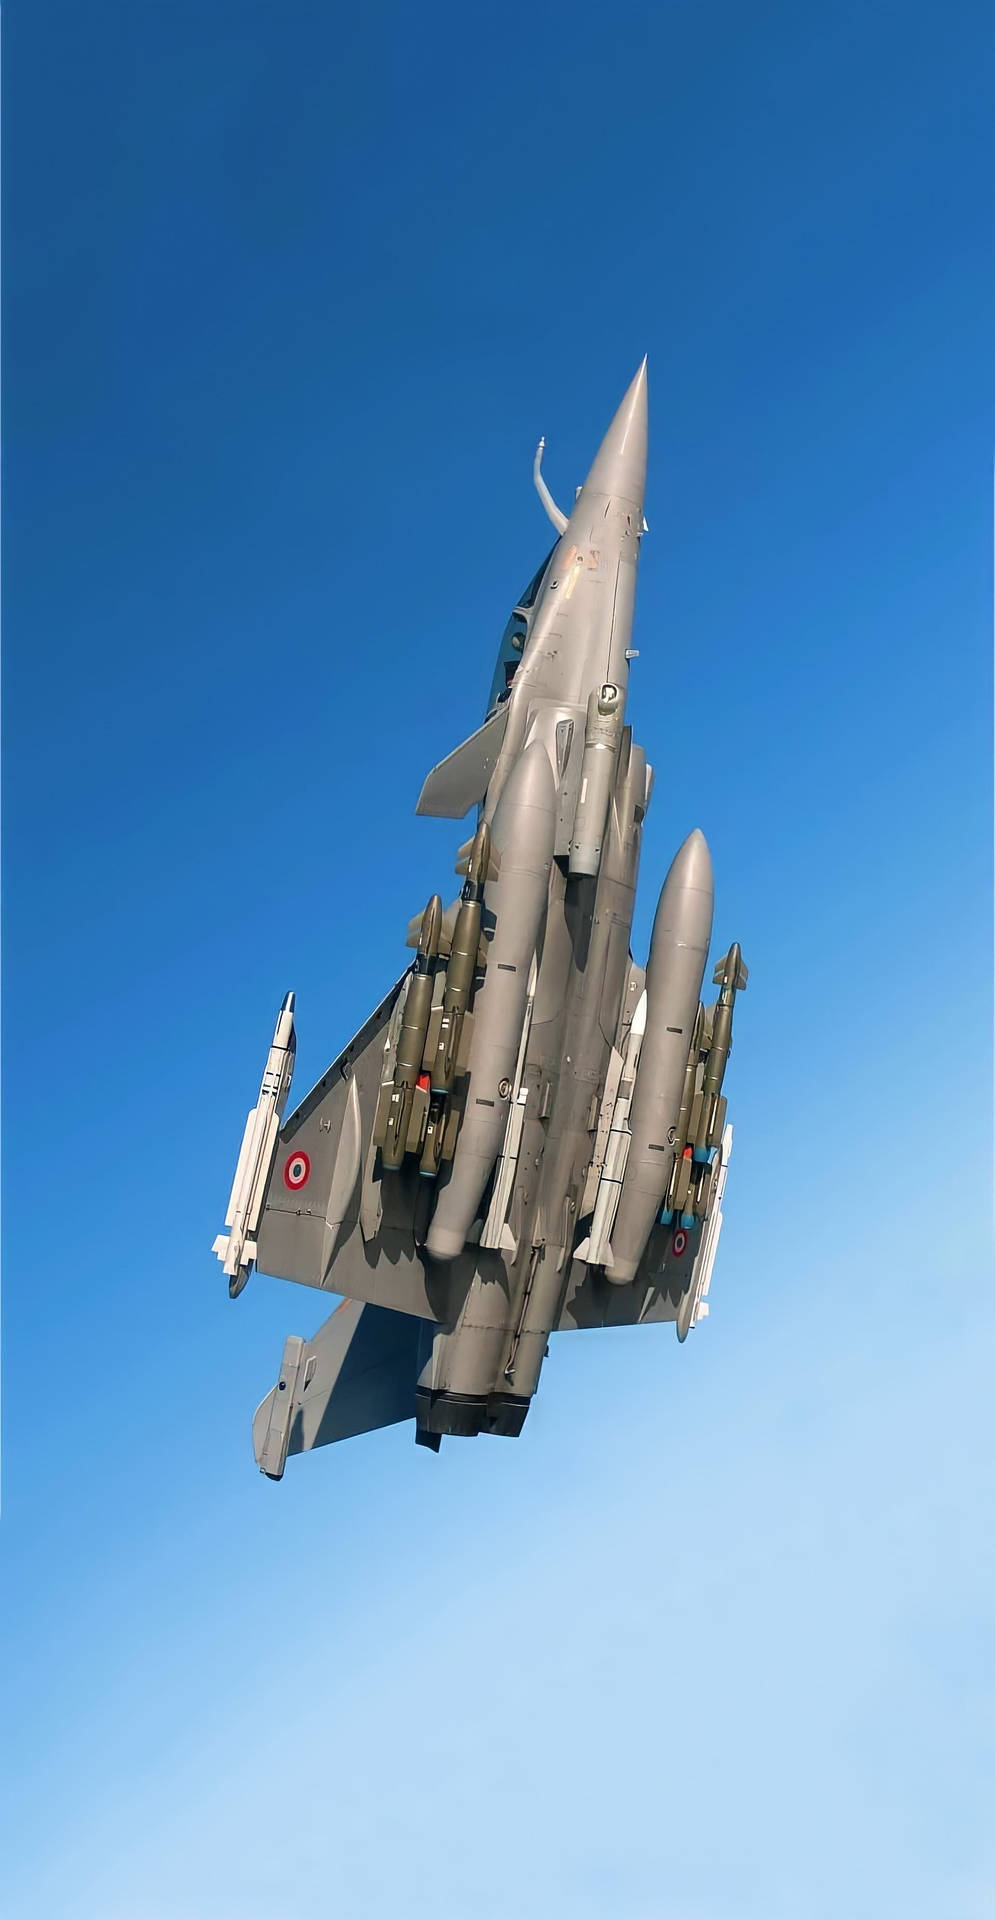 Waifu Fighter jets - YouTube